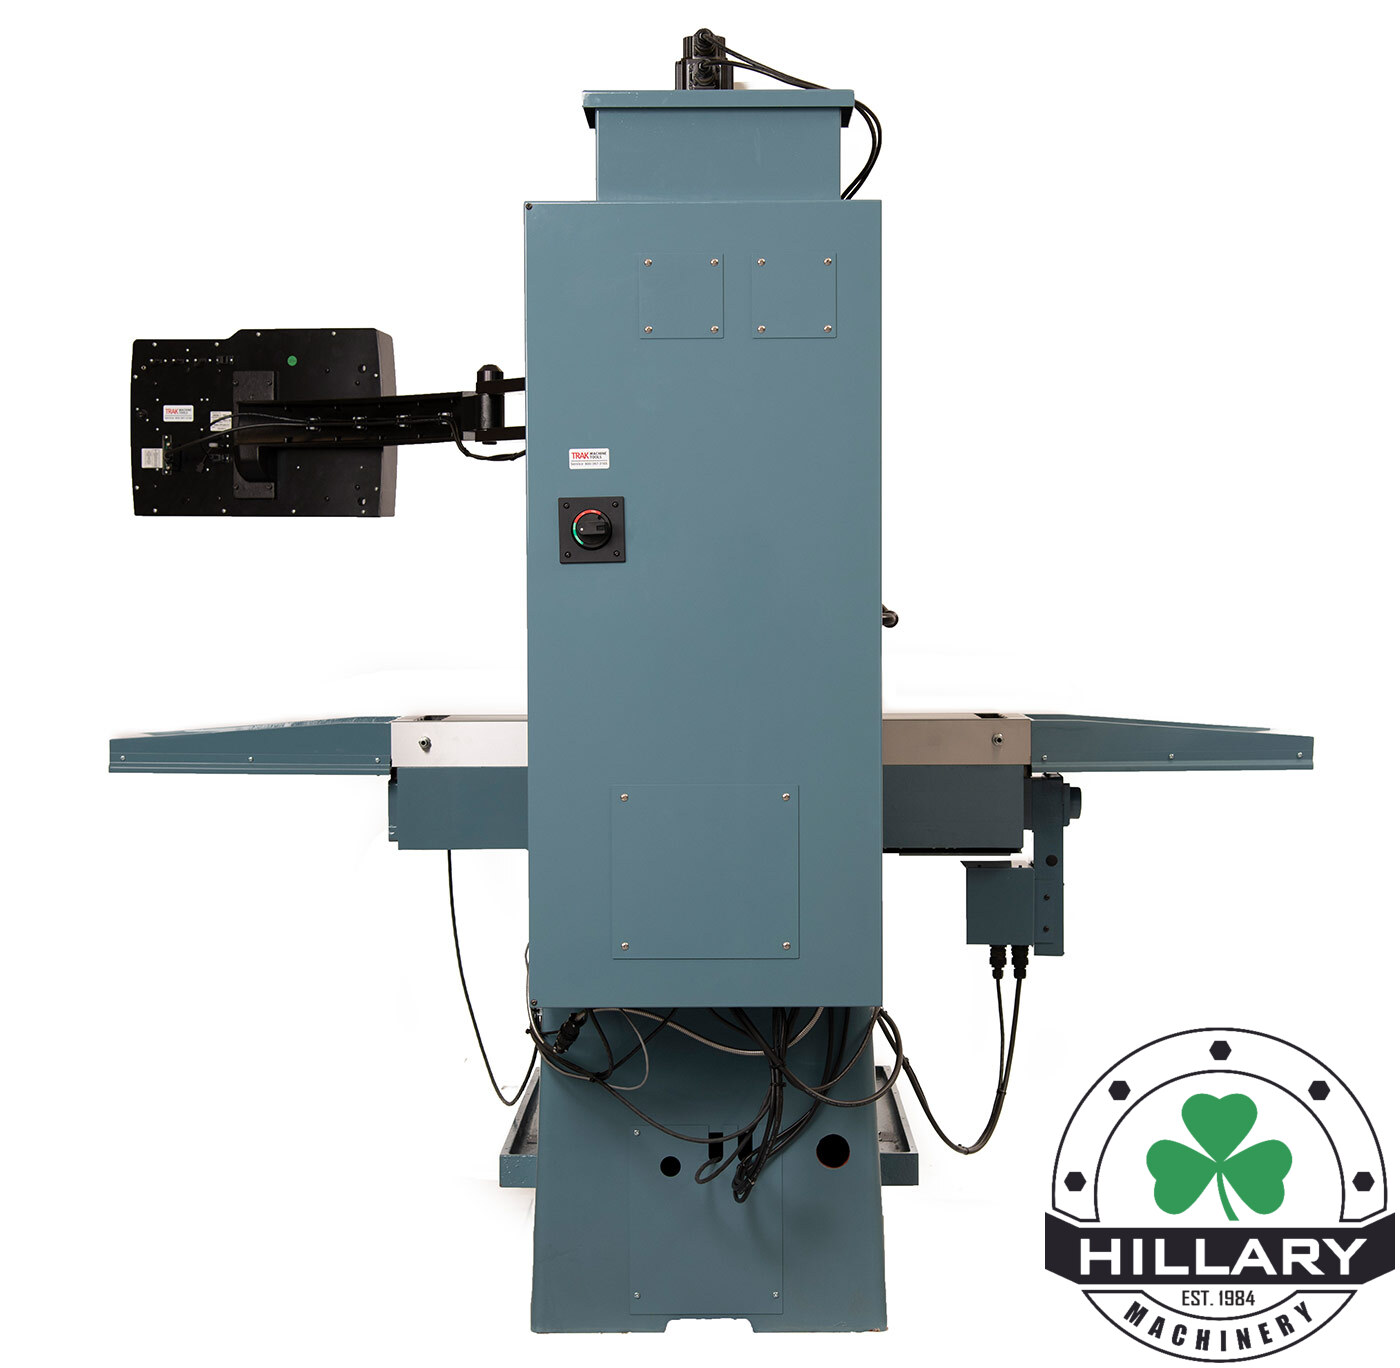 SOUTHWESTERN INDUSTRIES TRAK DPM RX5 Tool Room Mills | Hillary Machinery